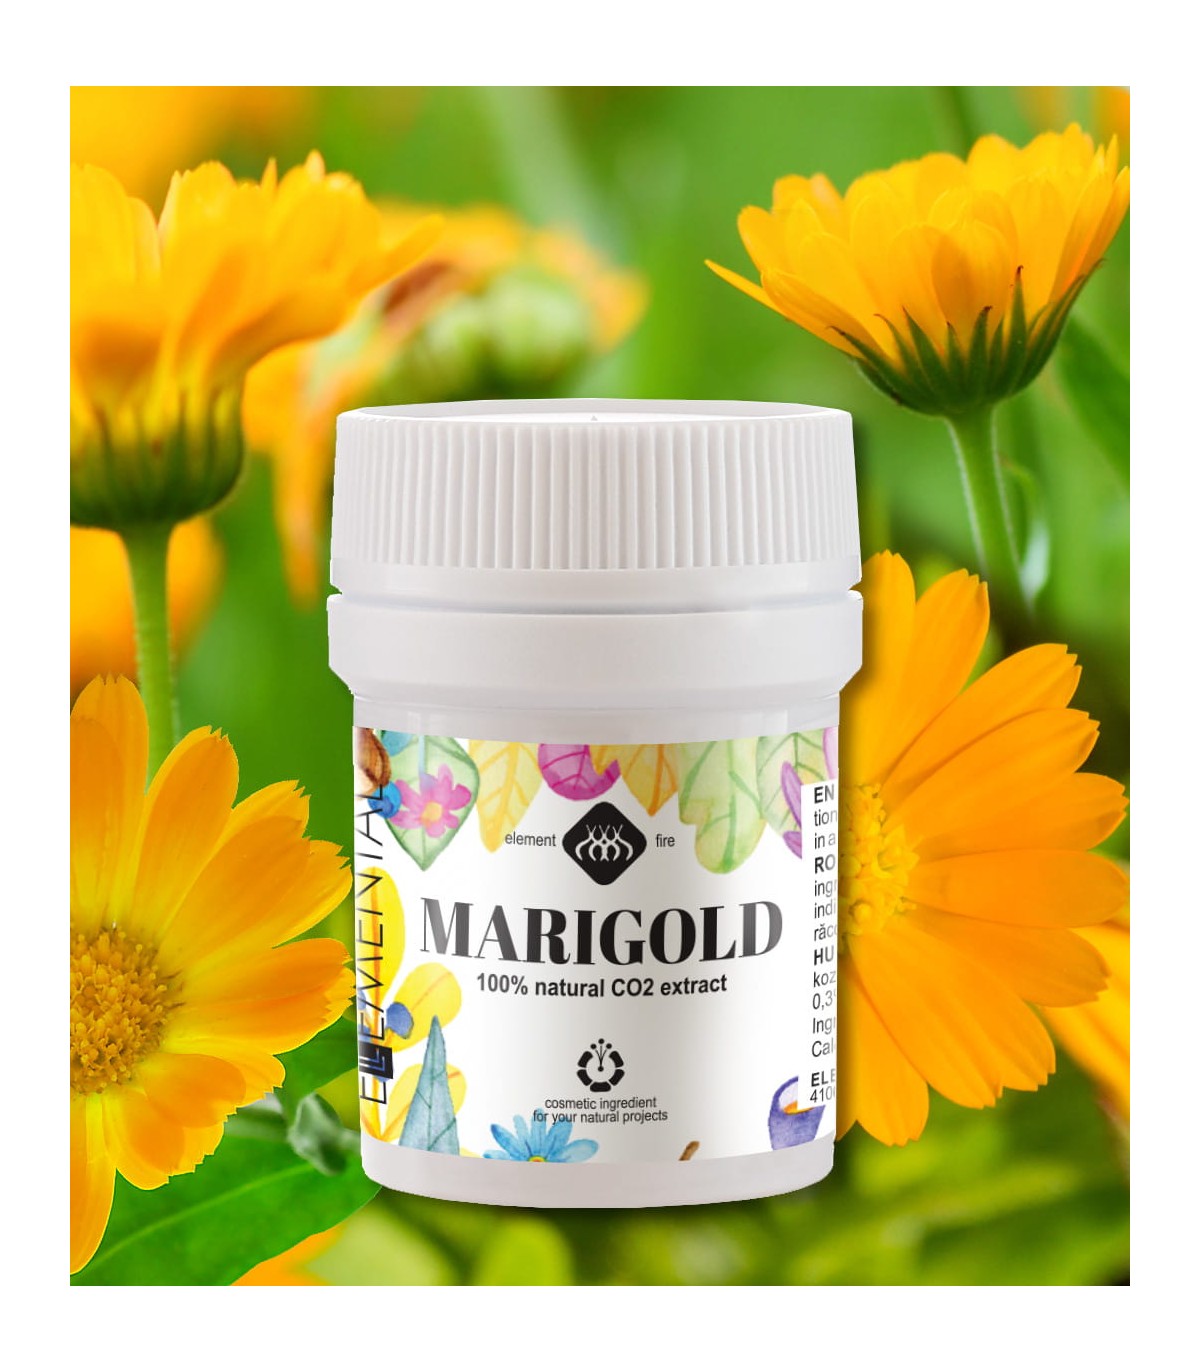 Marigold CO₂ extract